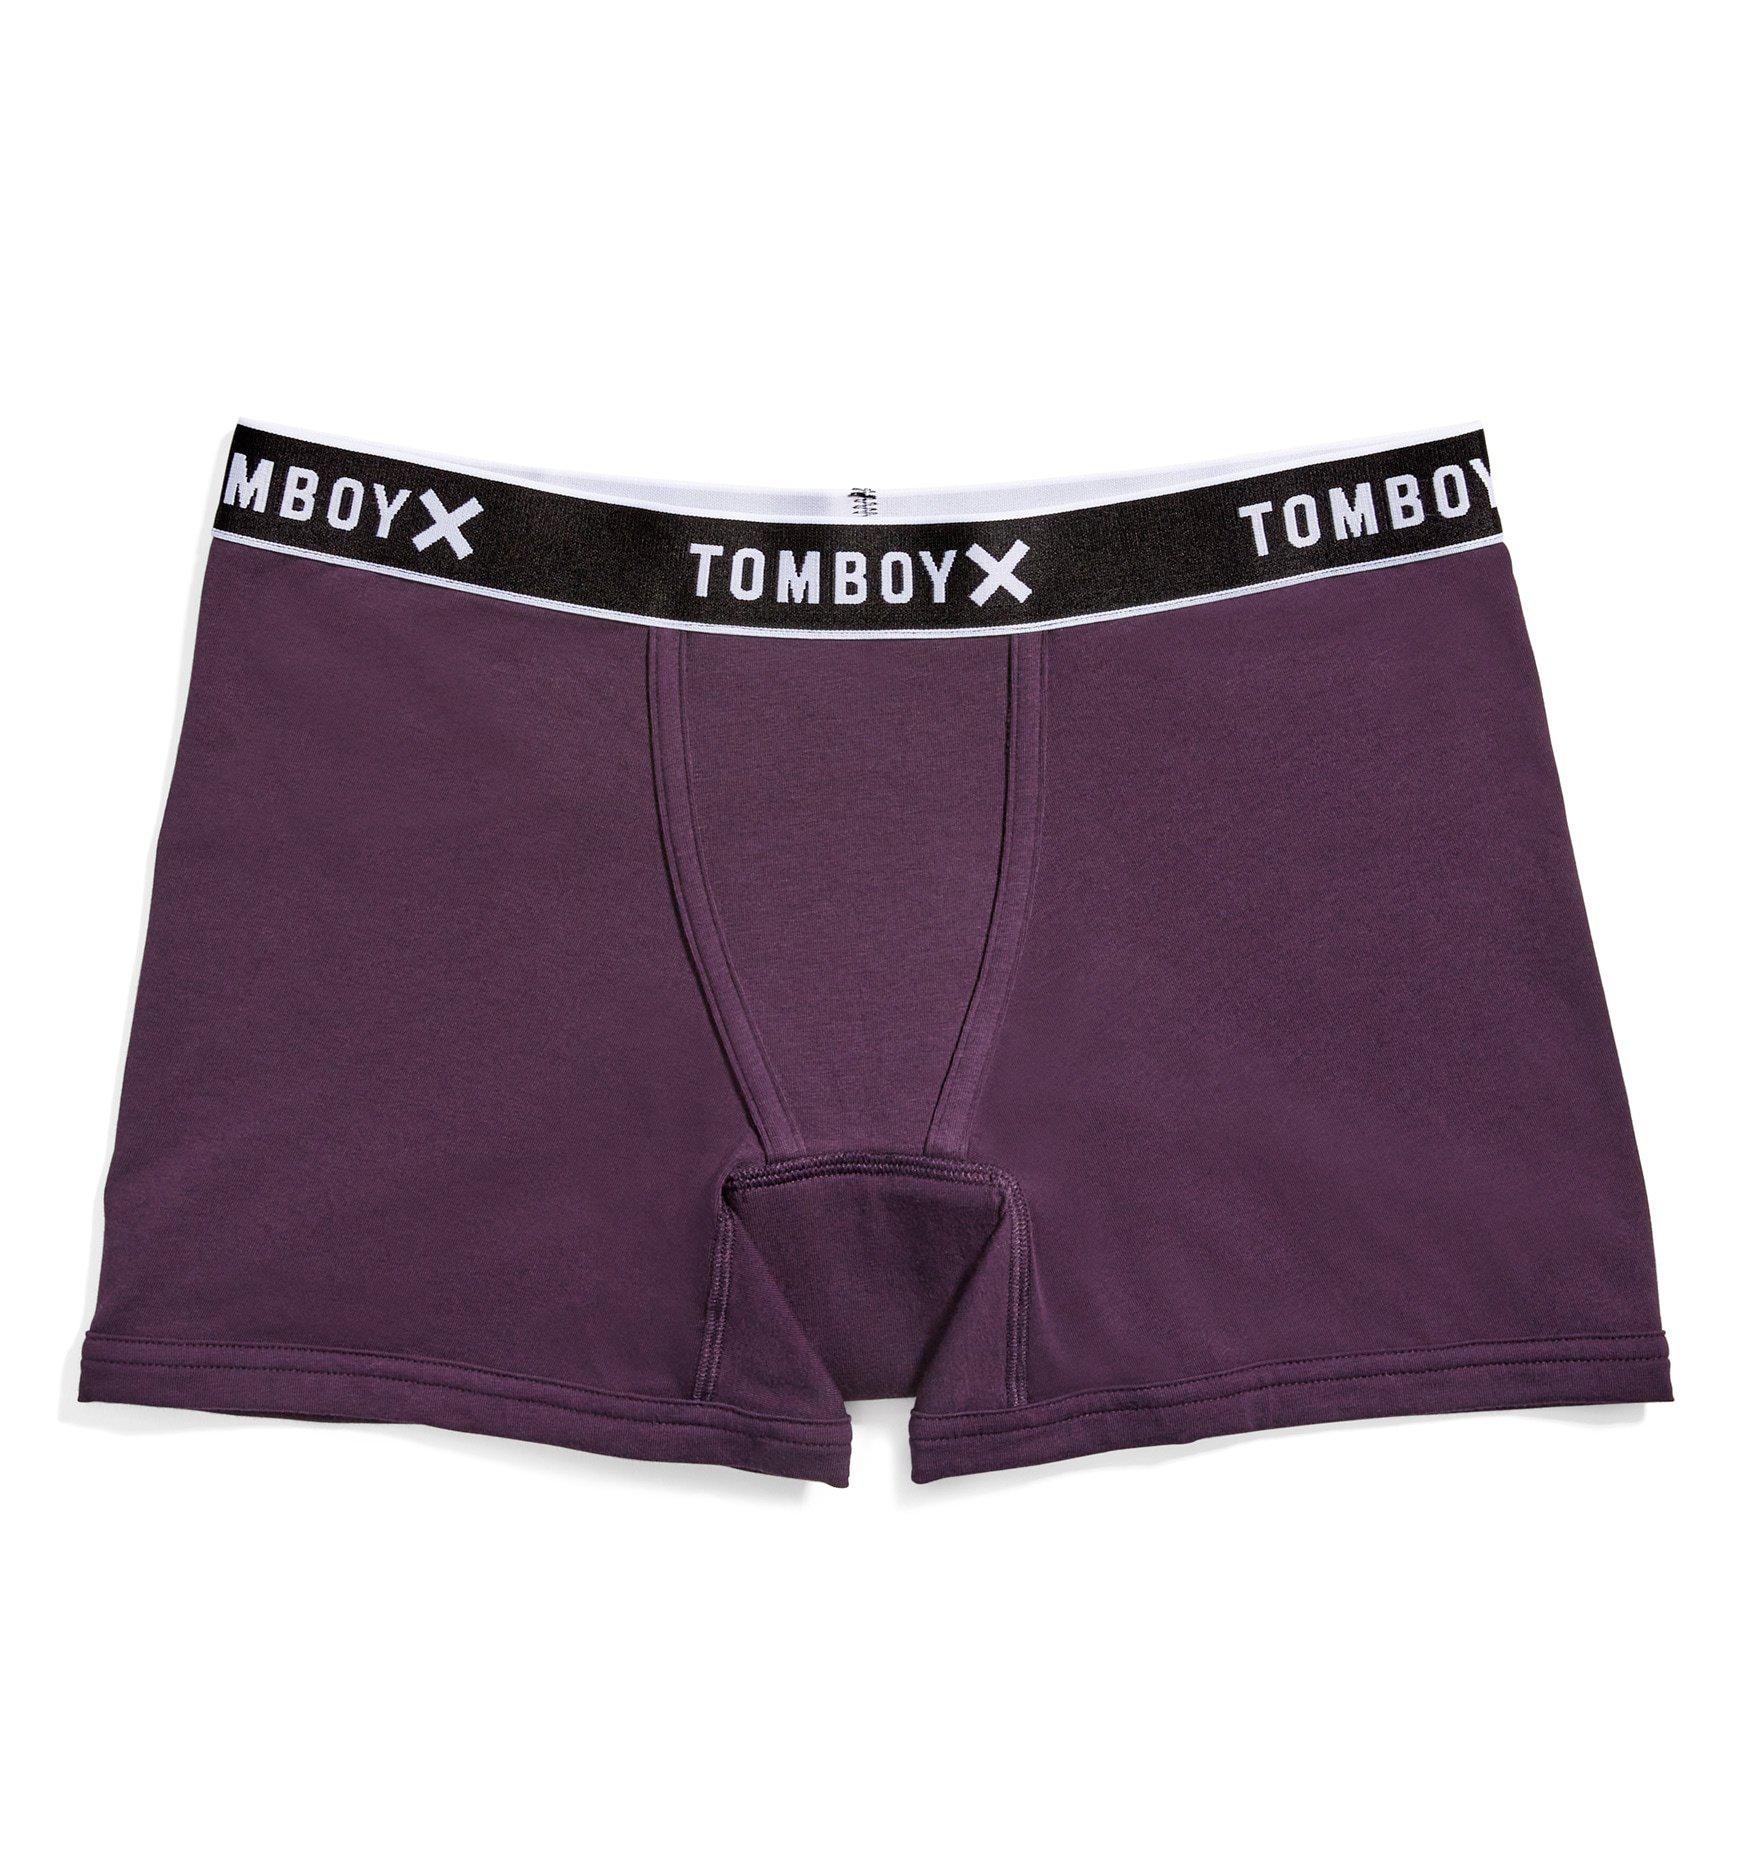 Tomboy X, Intimates & Sleepwear, Tomboy X First Line Boxer Briefs Period  Protection Boy Short Black L Nwot